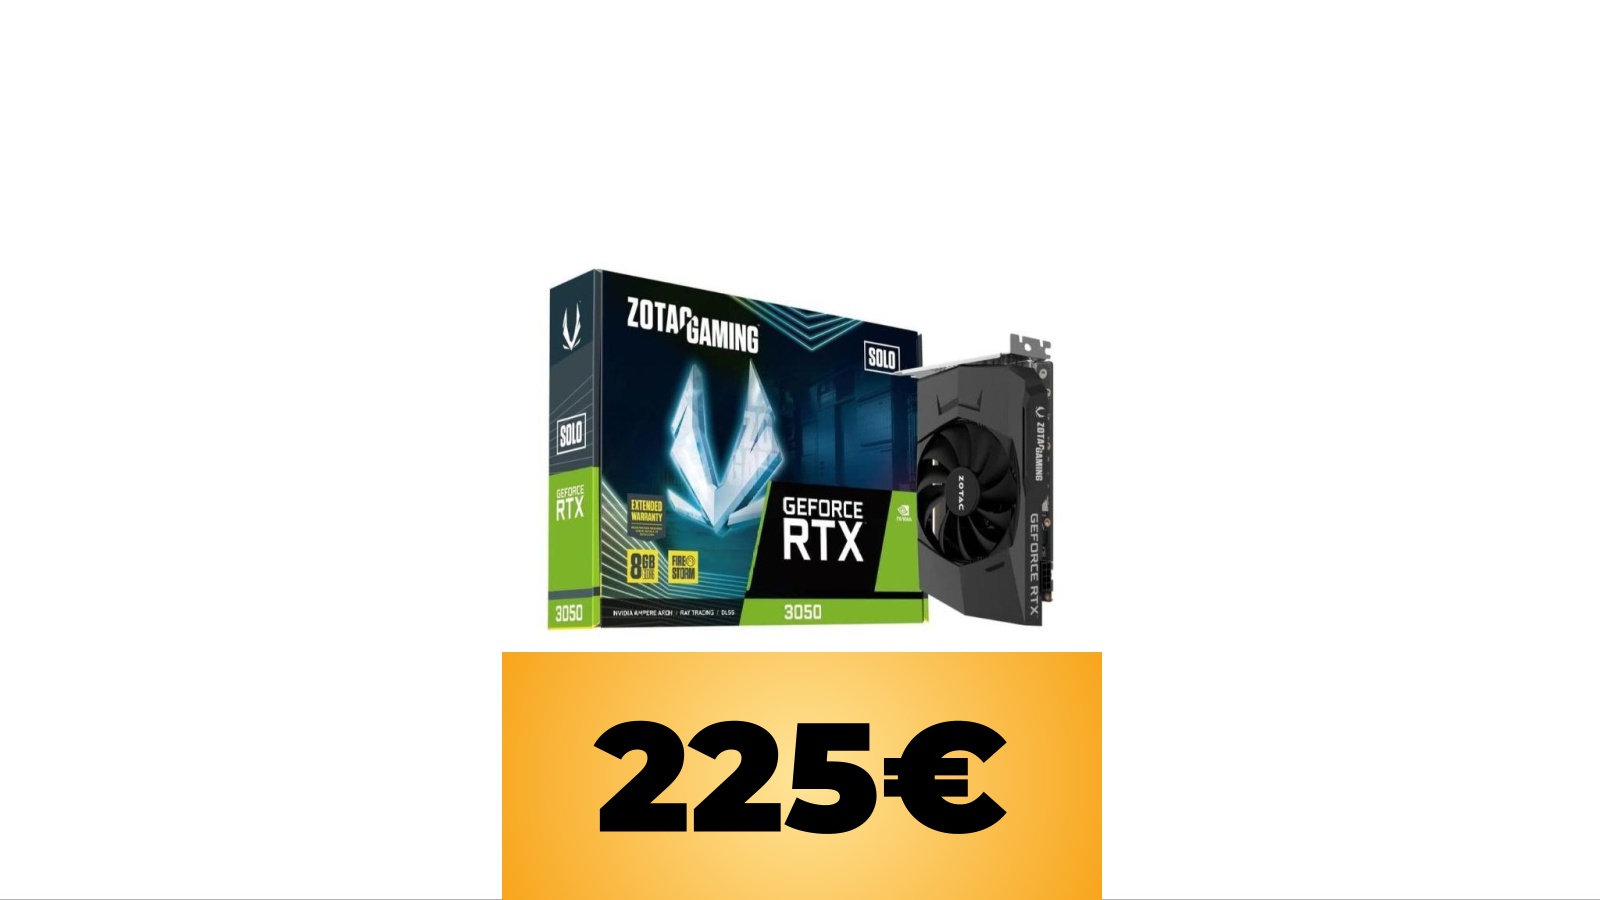 Zotac Gaming GeForce RTX 3050, l'offerta Amazon propone la GPU al prezzo minimo storico